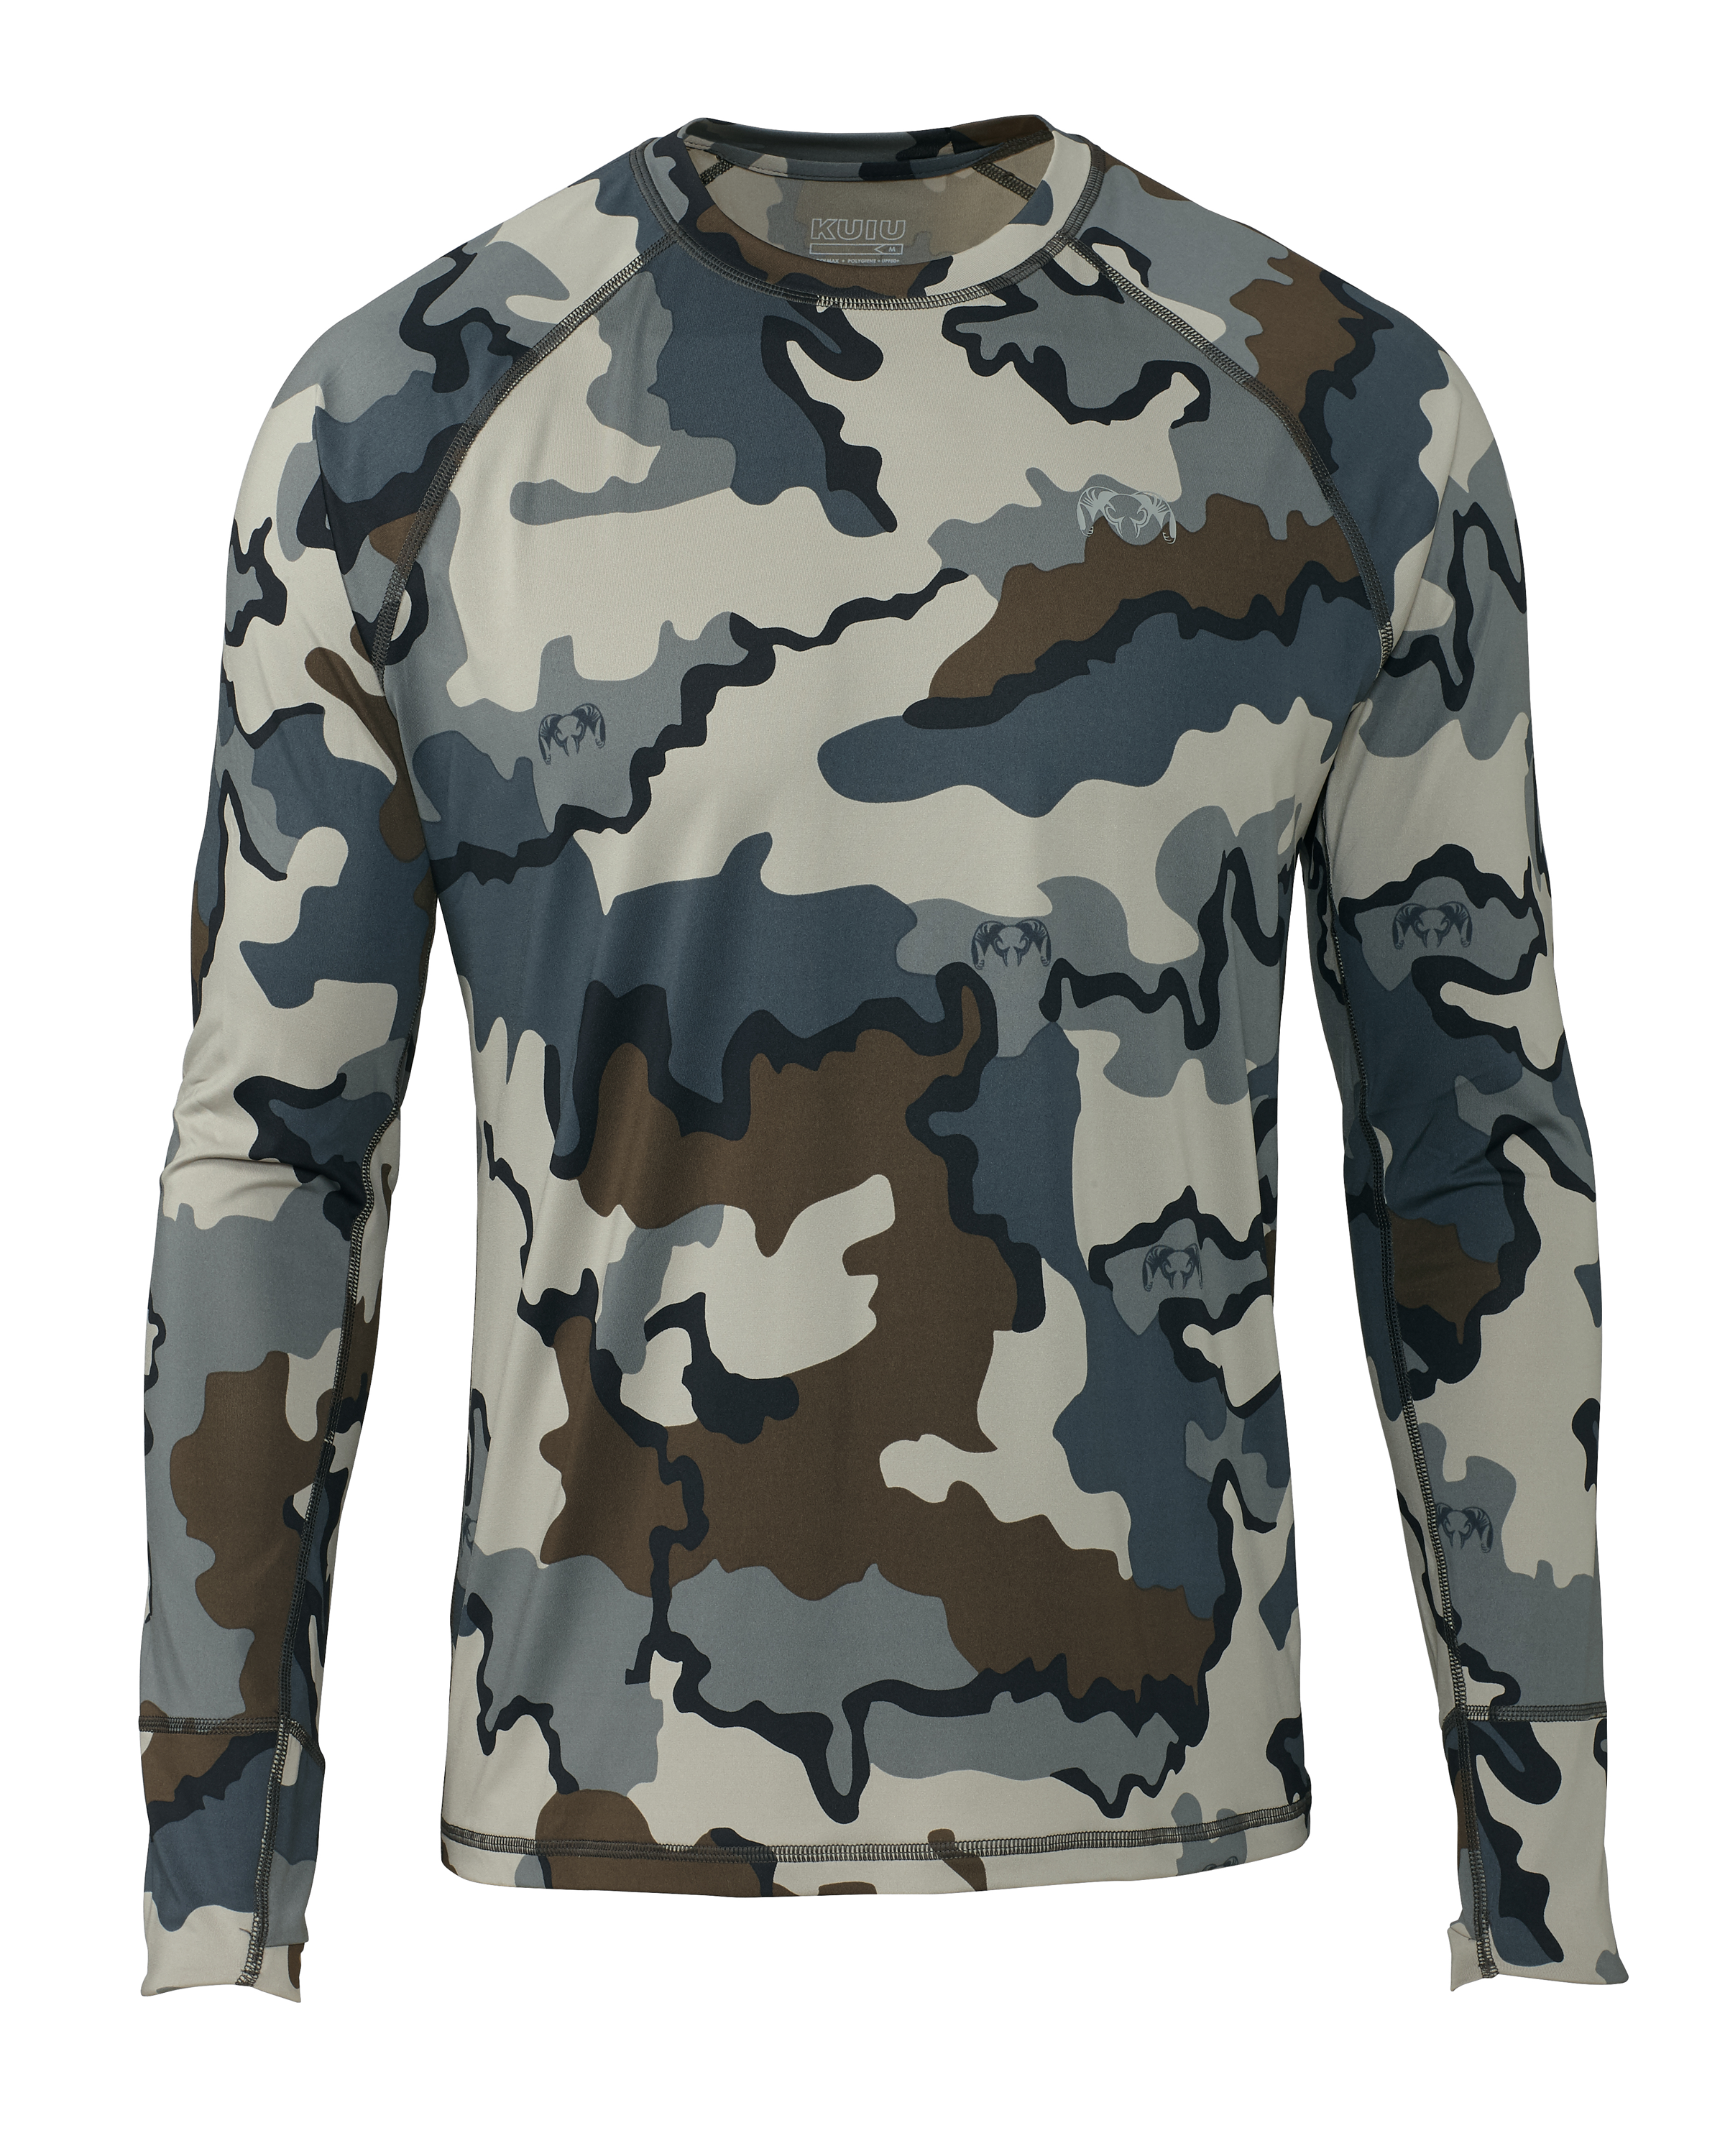 KUIU Gila Long Sleeves Crew Hunting Shirt in Vias | Size Medium